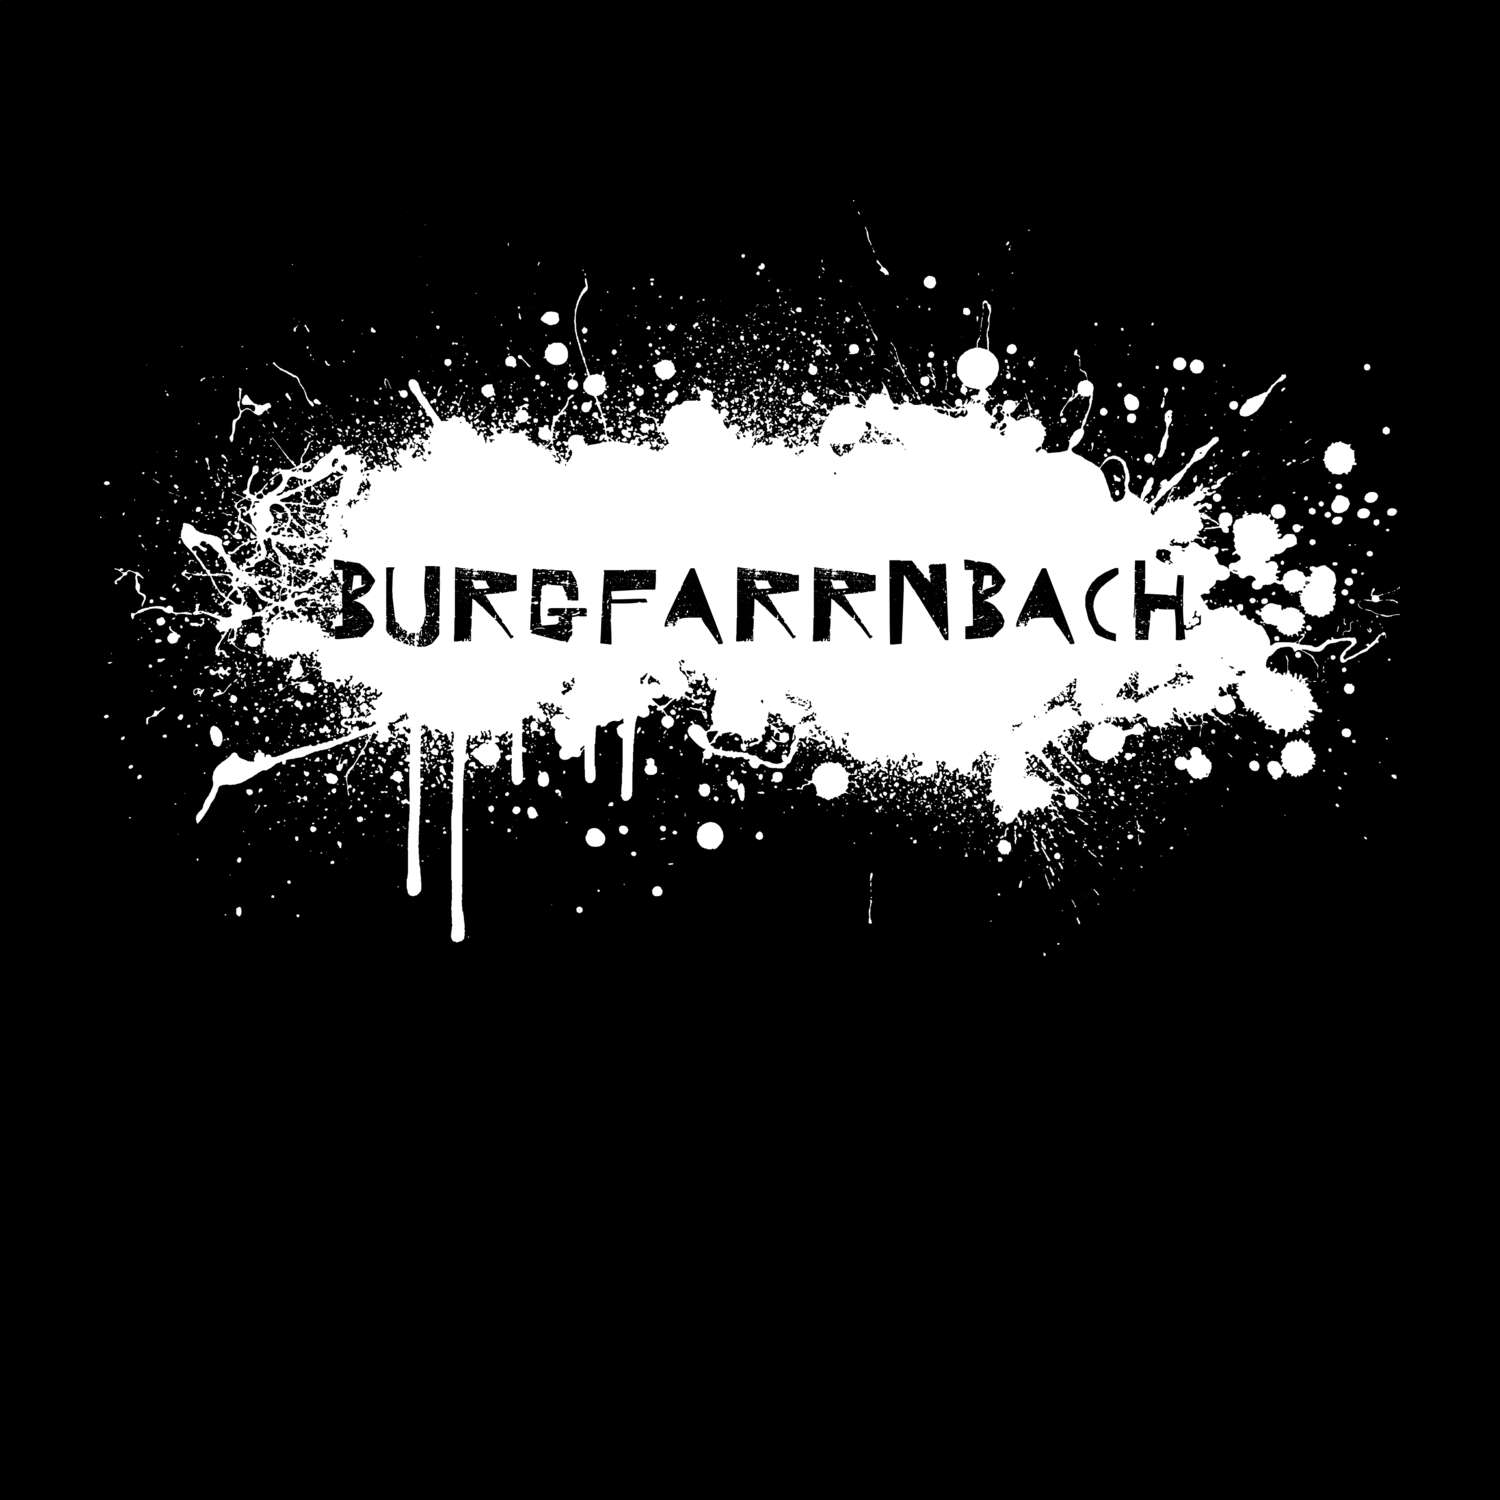 Burgfarrnbach T-Shirt »Paint Splash Punk«